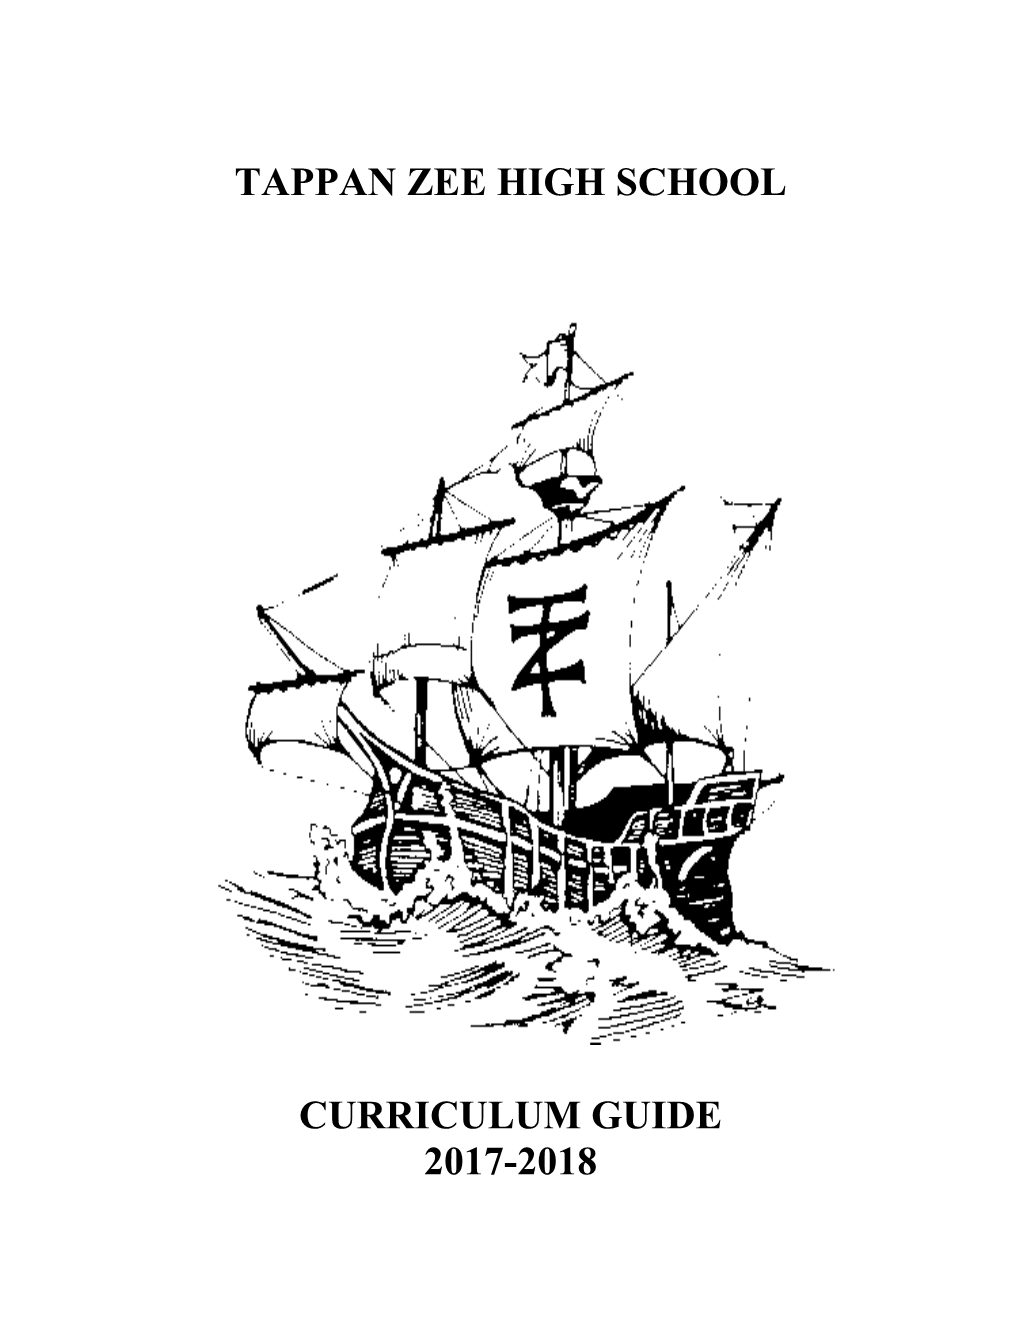 Tappan Zee High School Curriculum Guide 2017-2018